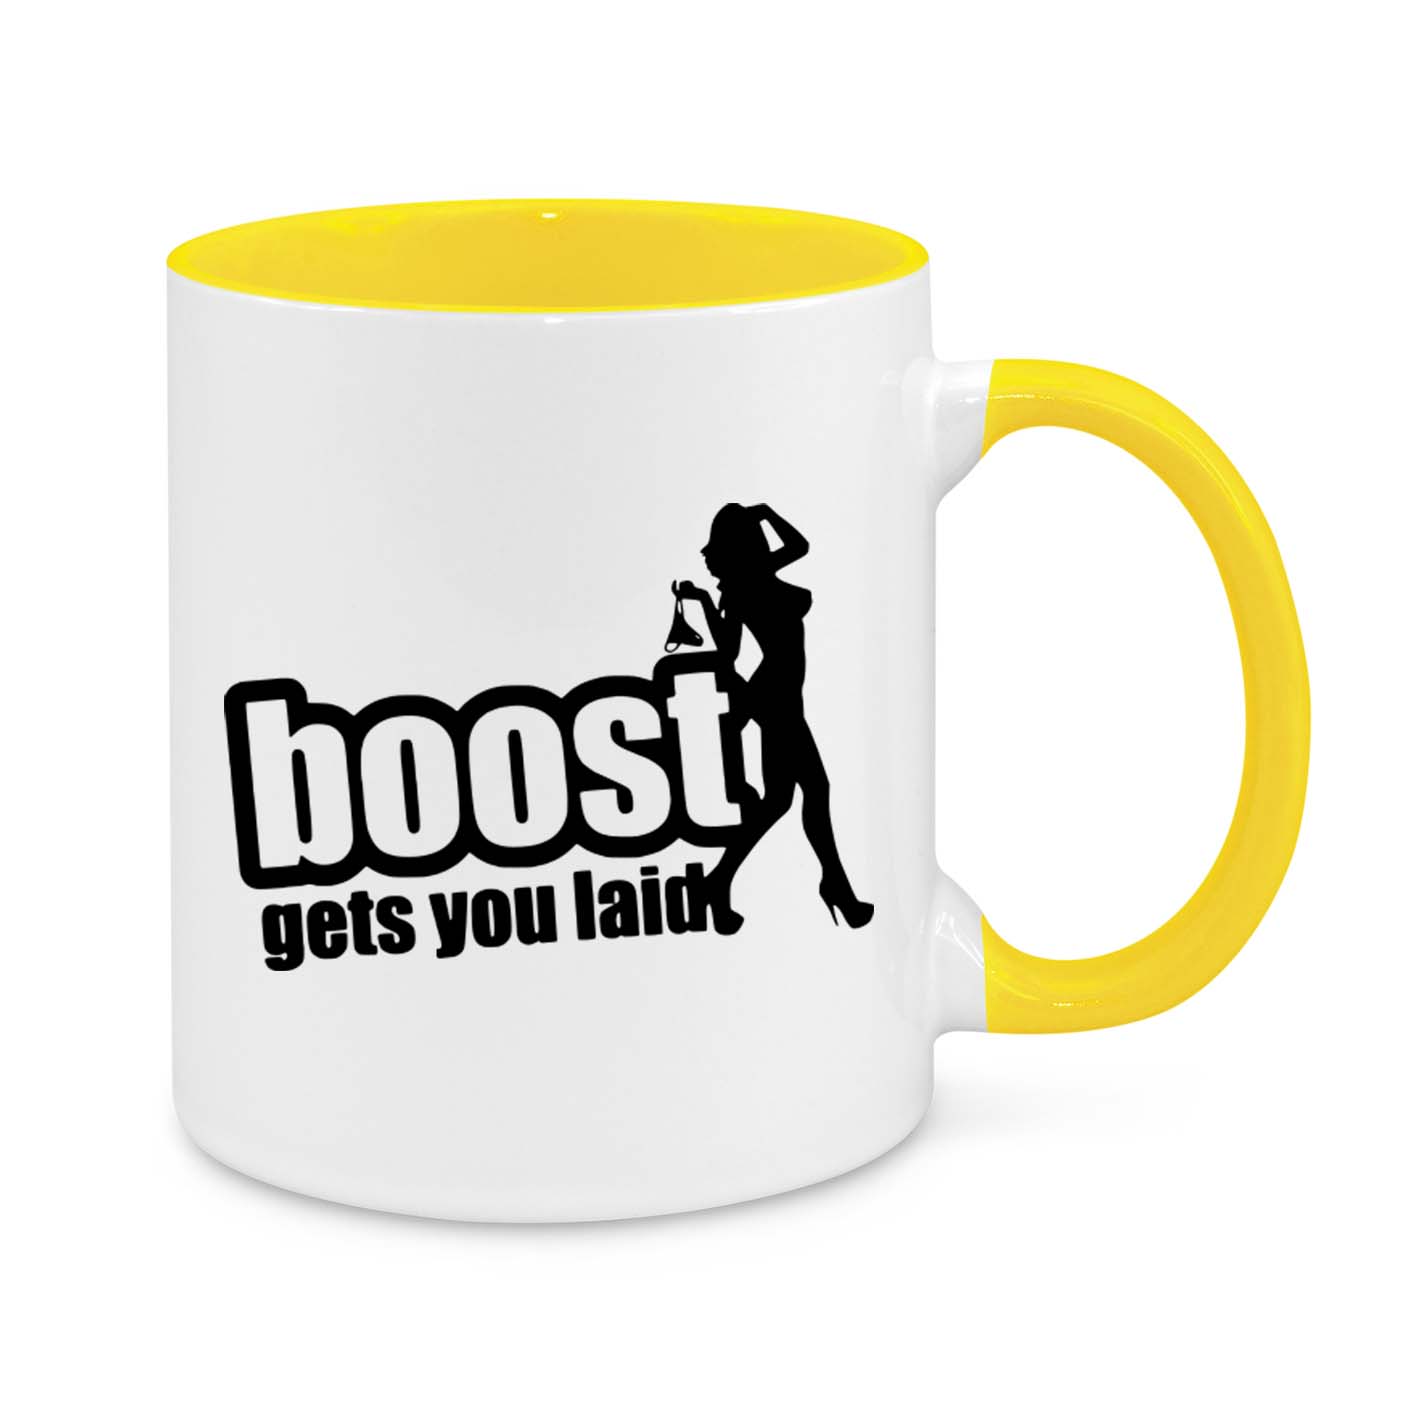 Boost Novelty Mug